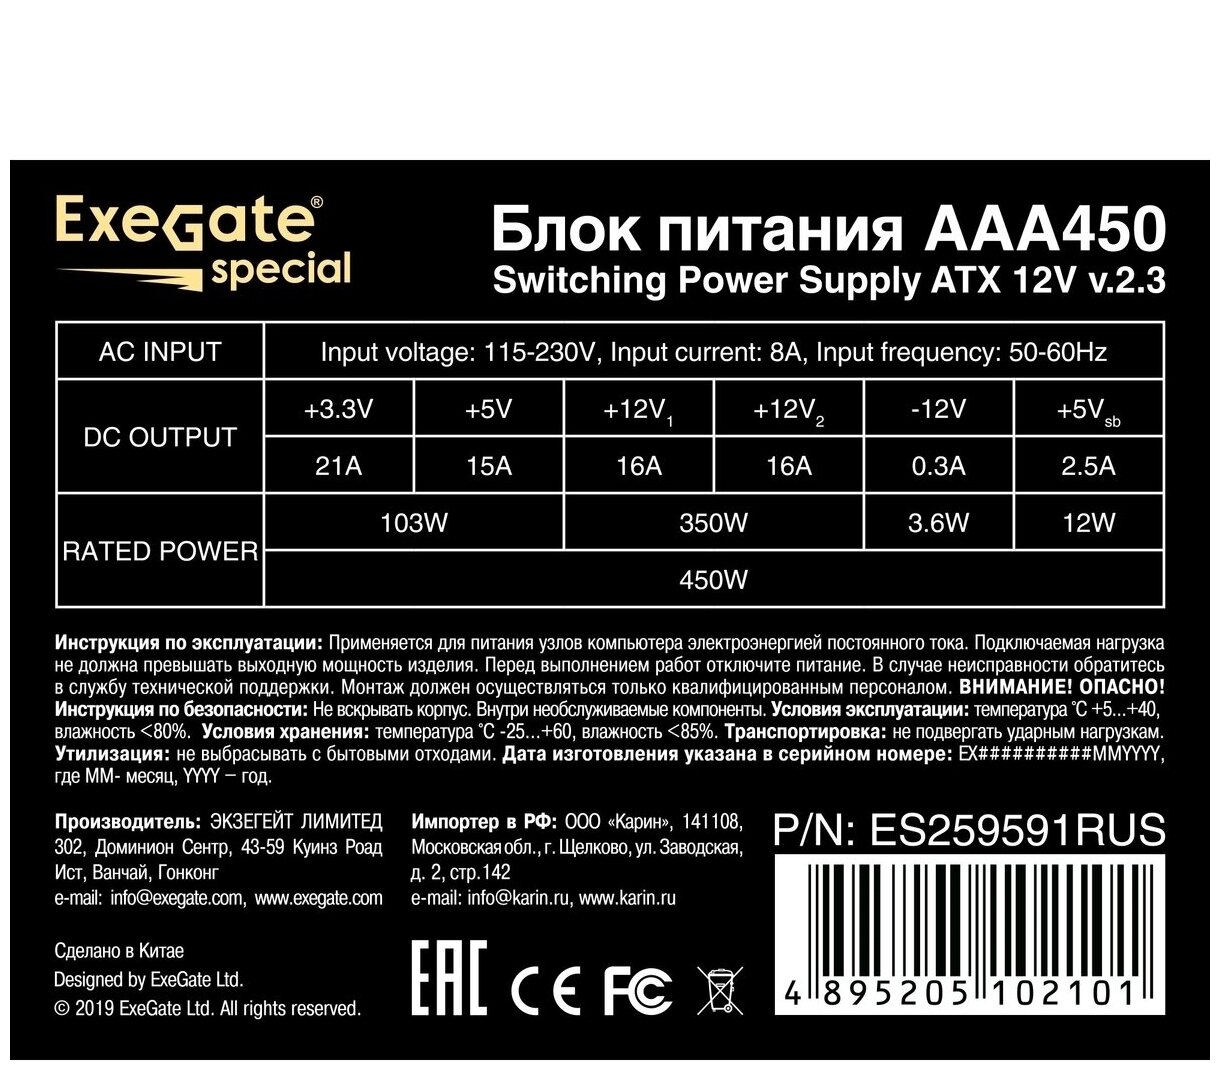 Блок питания Exegate 450W AAA450 ATX ES259591RUS OEM